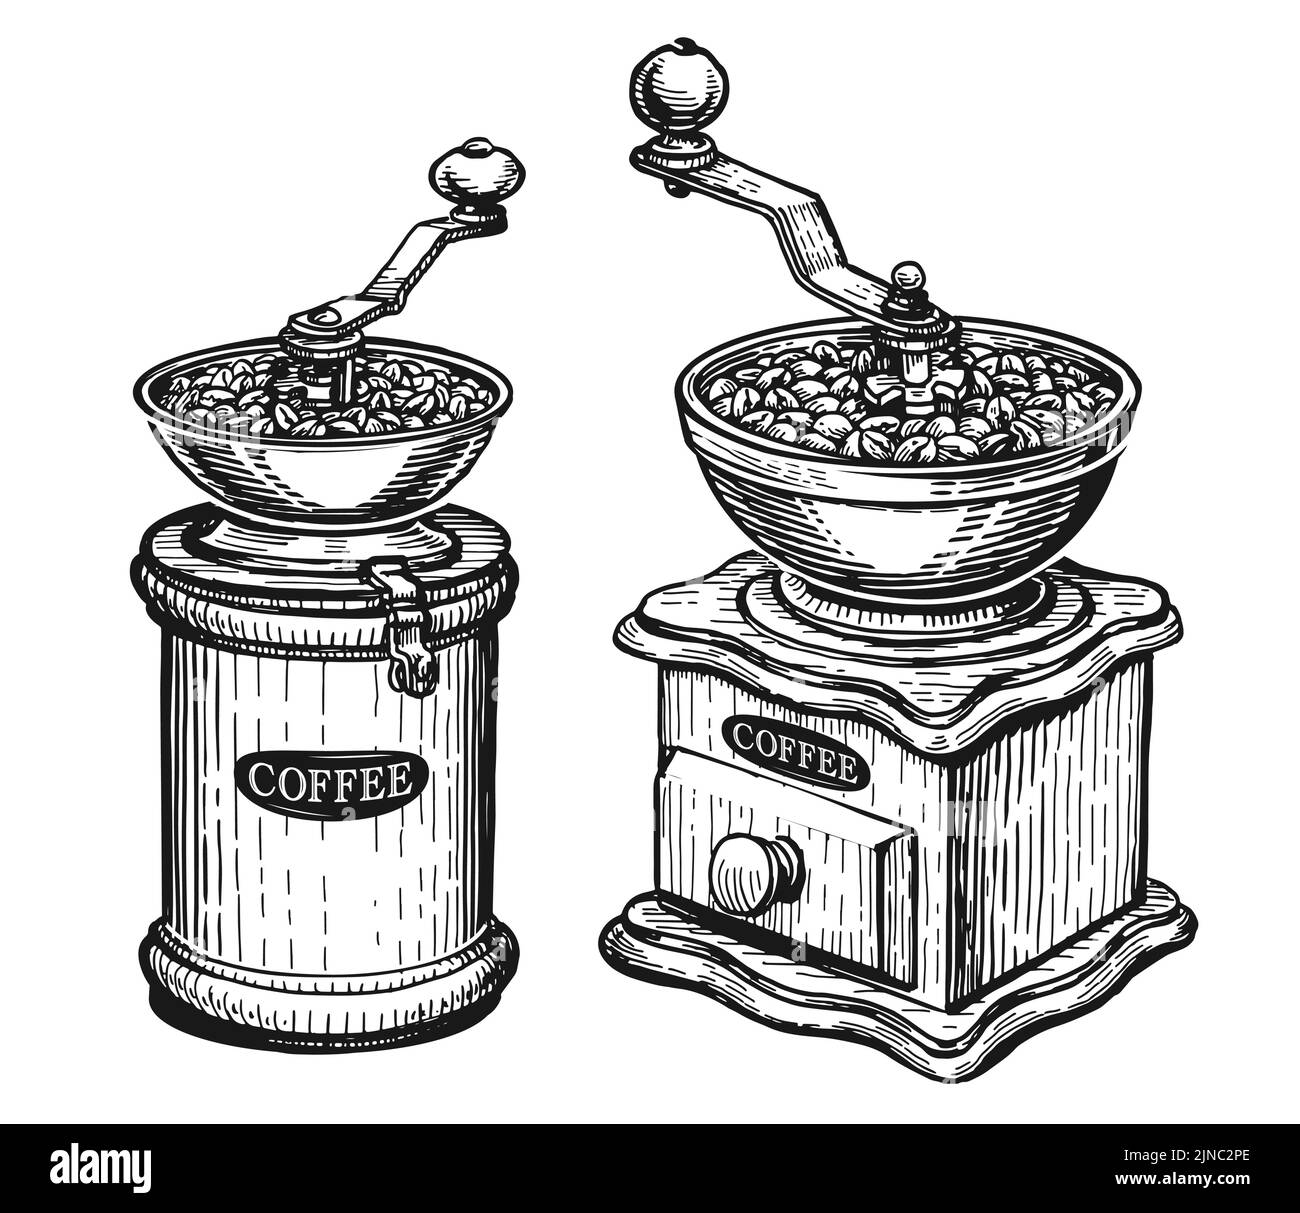 Retro manual coffee grinder or mill sketch. Coffee shop concept. Vector illustration in vintage engraving style Stock Vector